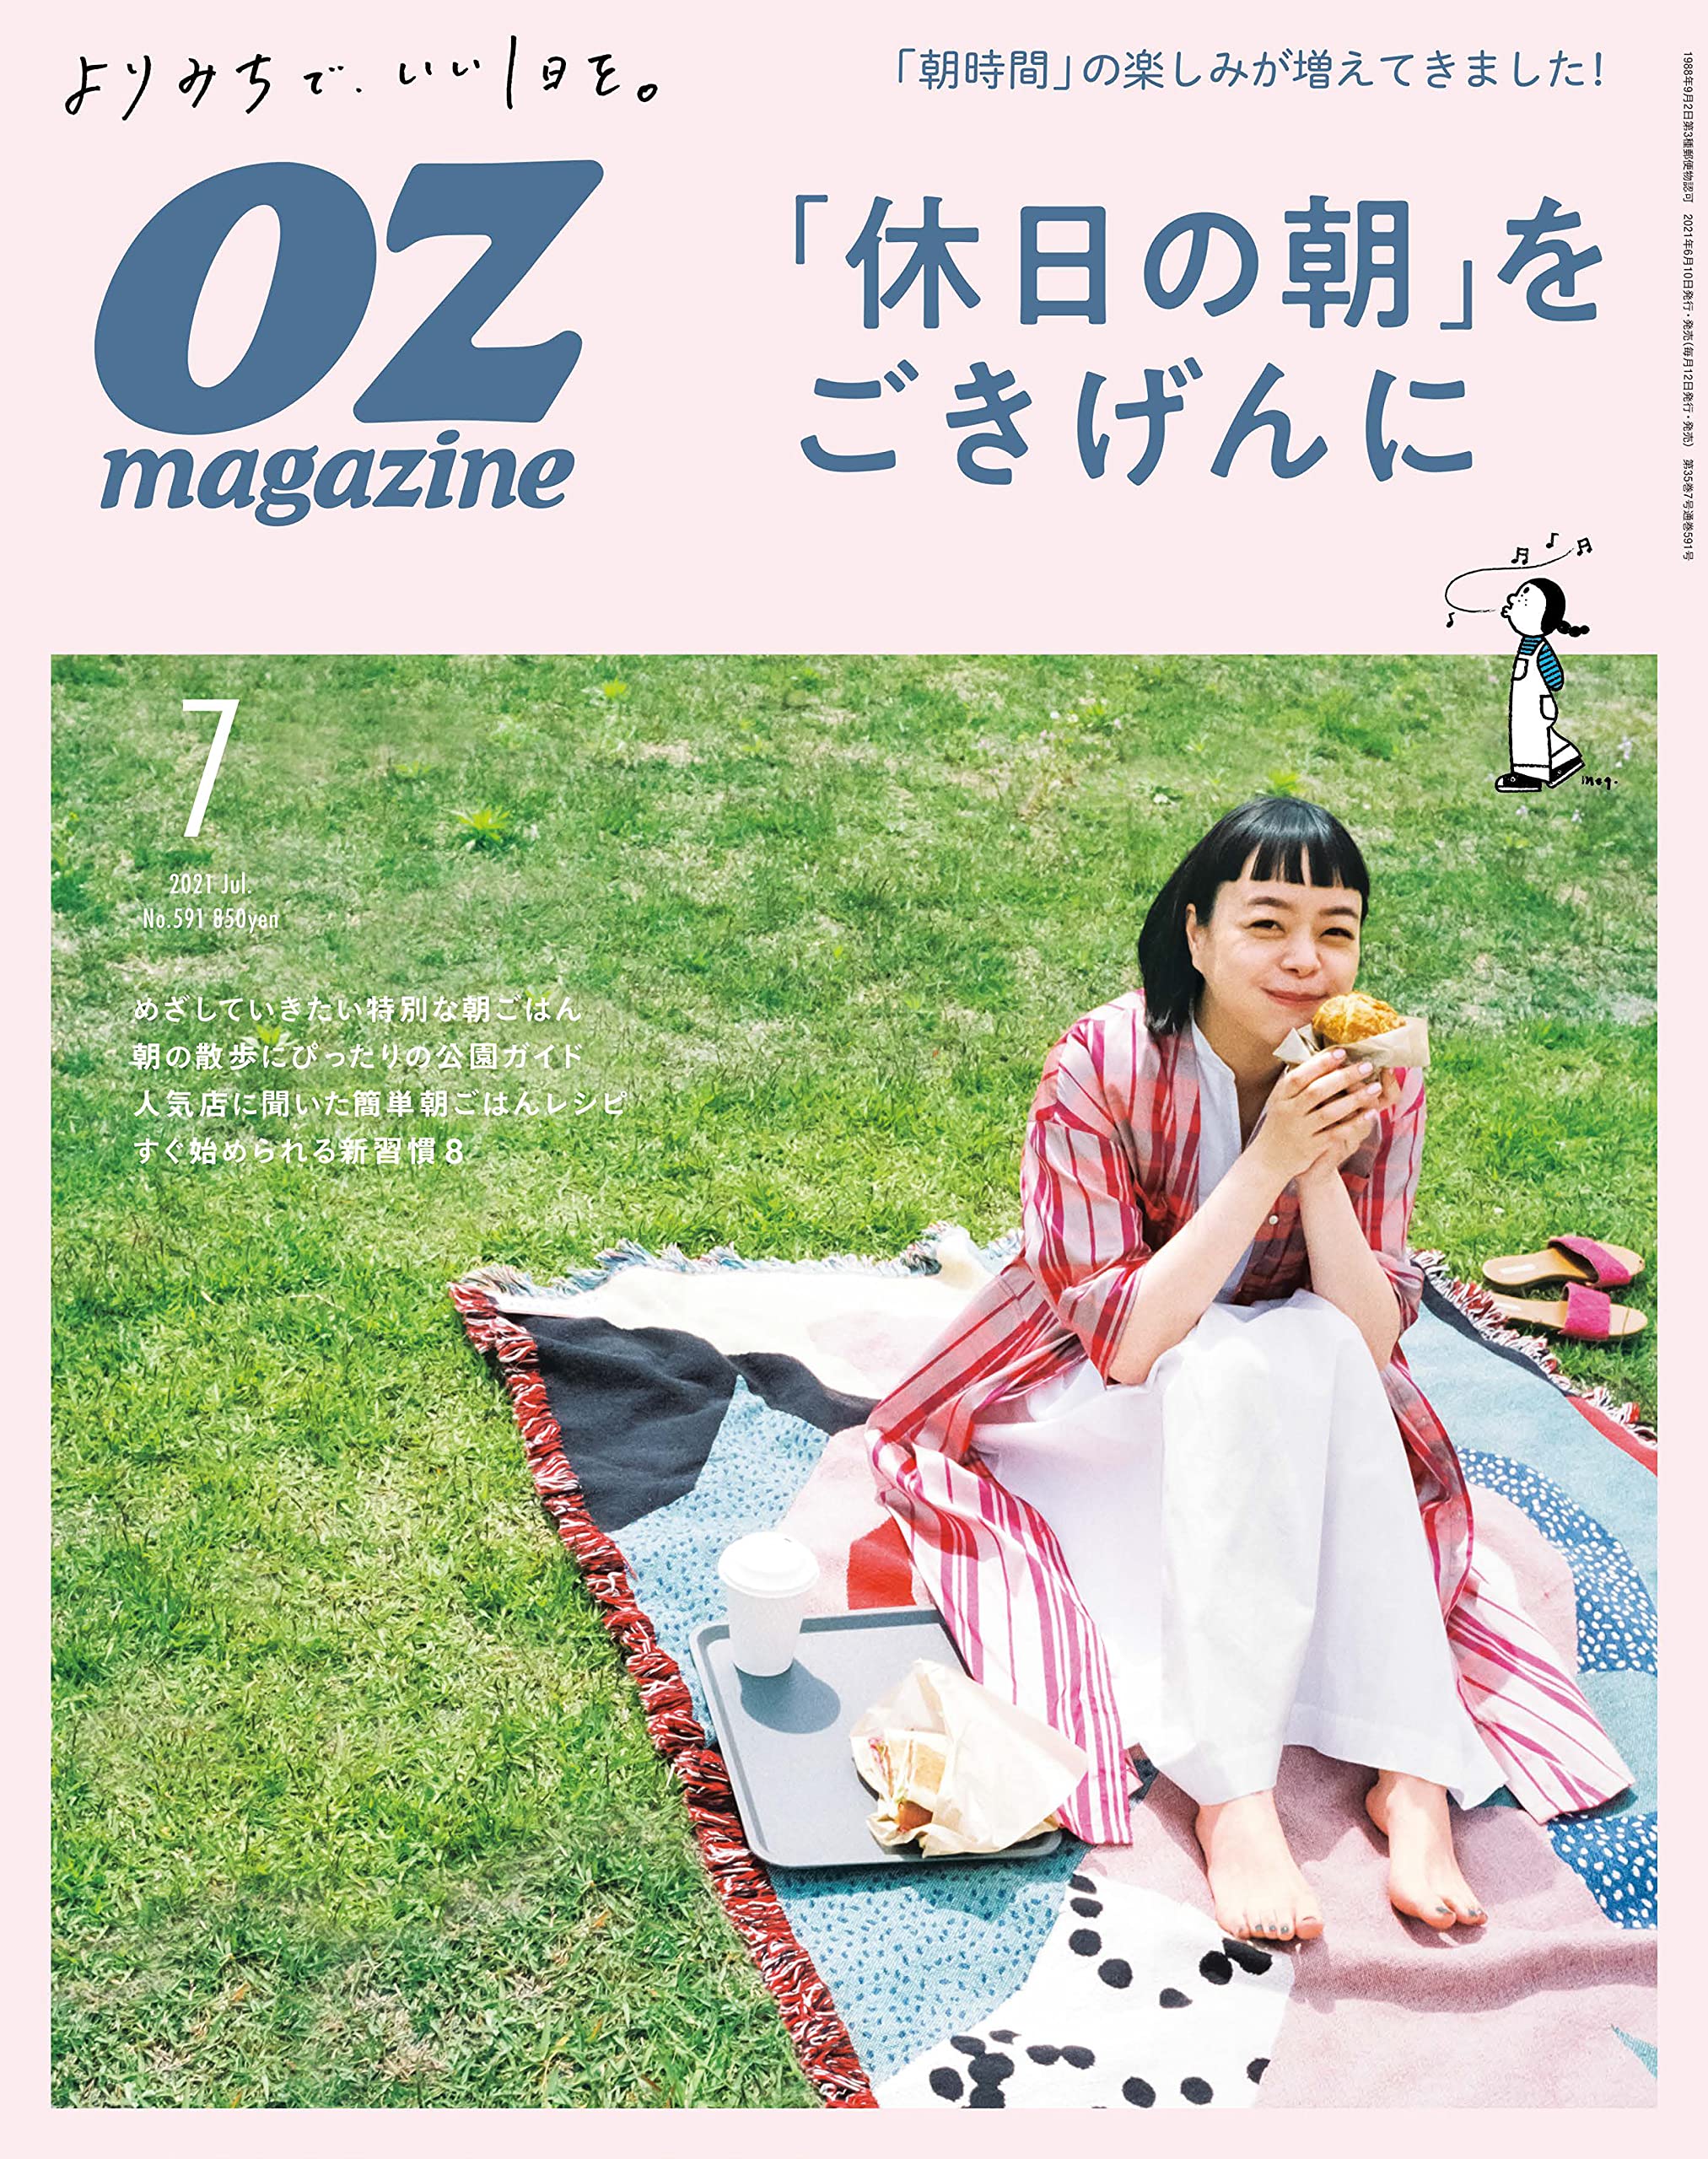 OZmagazine 2021年7月號No.591「休日の朝」をごきげんに (オズマガジン)